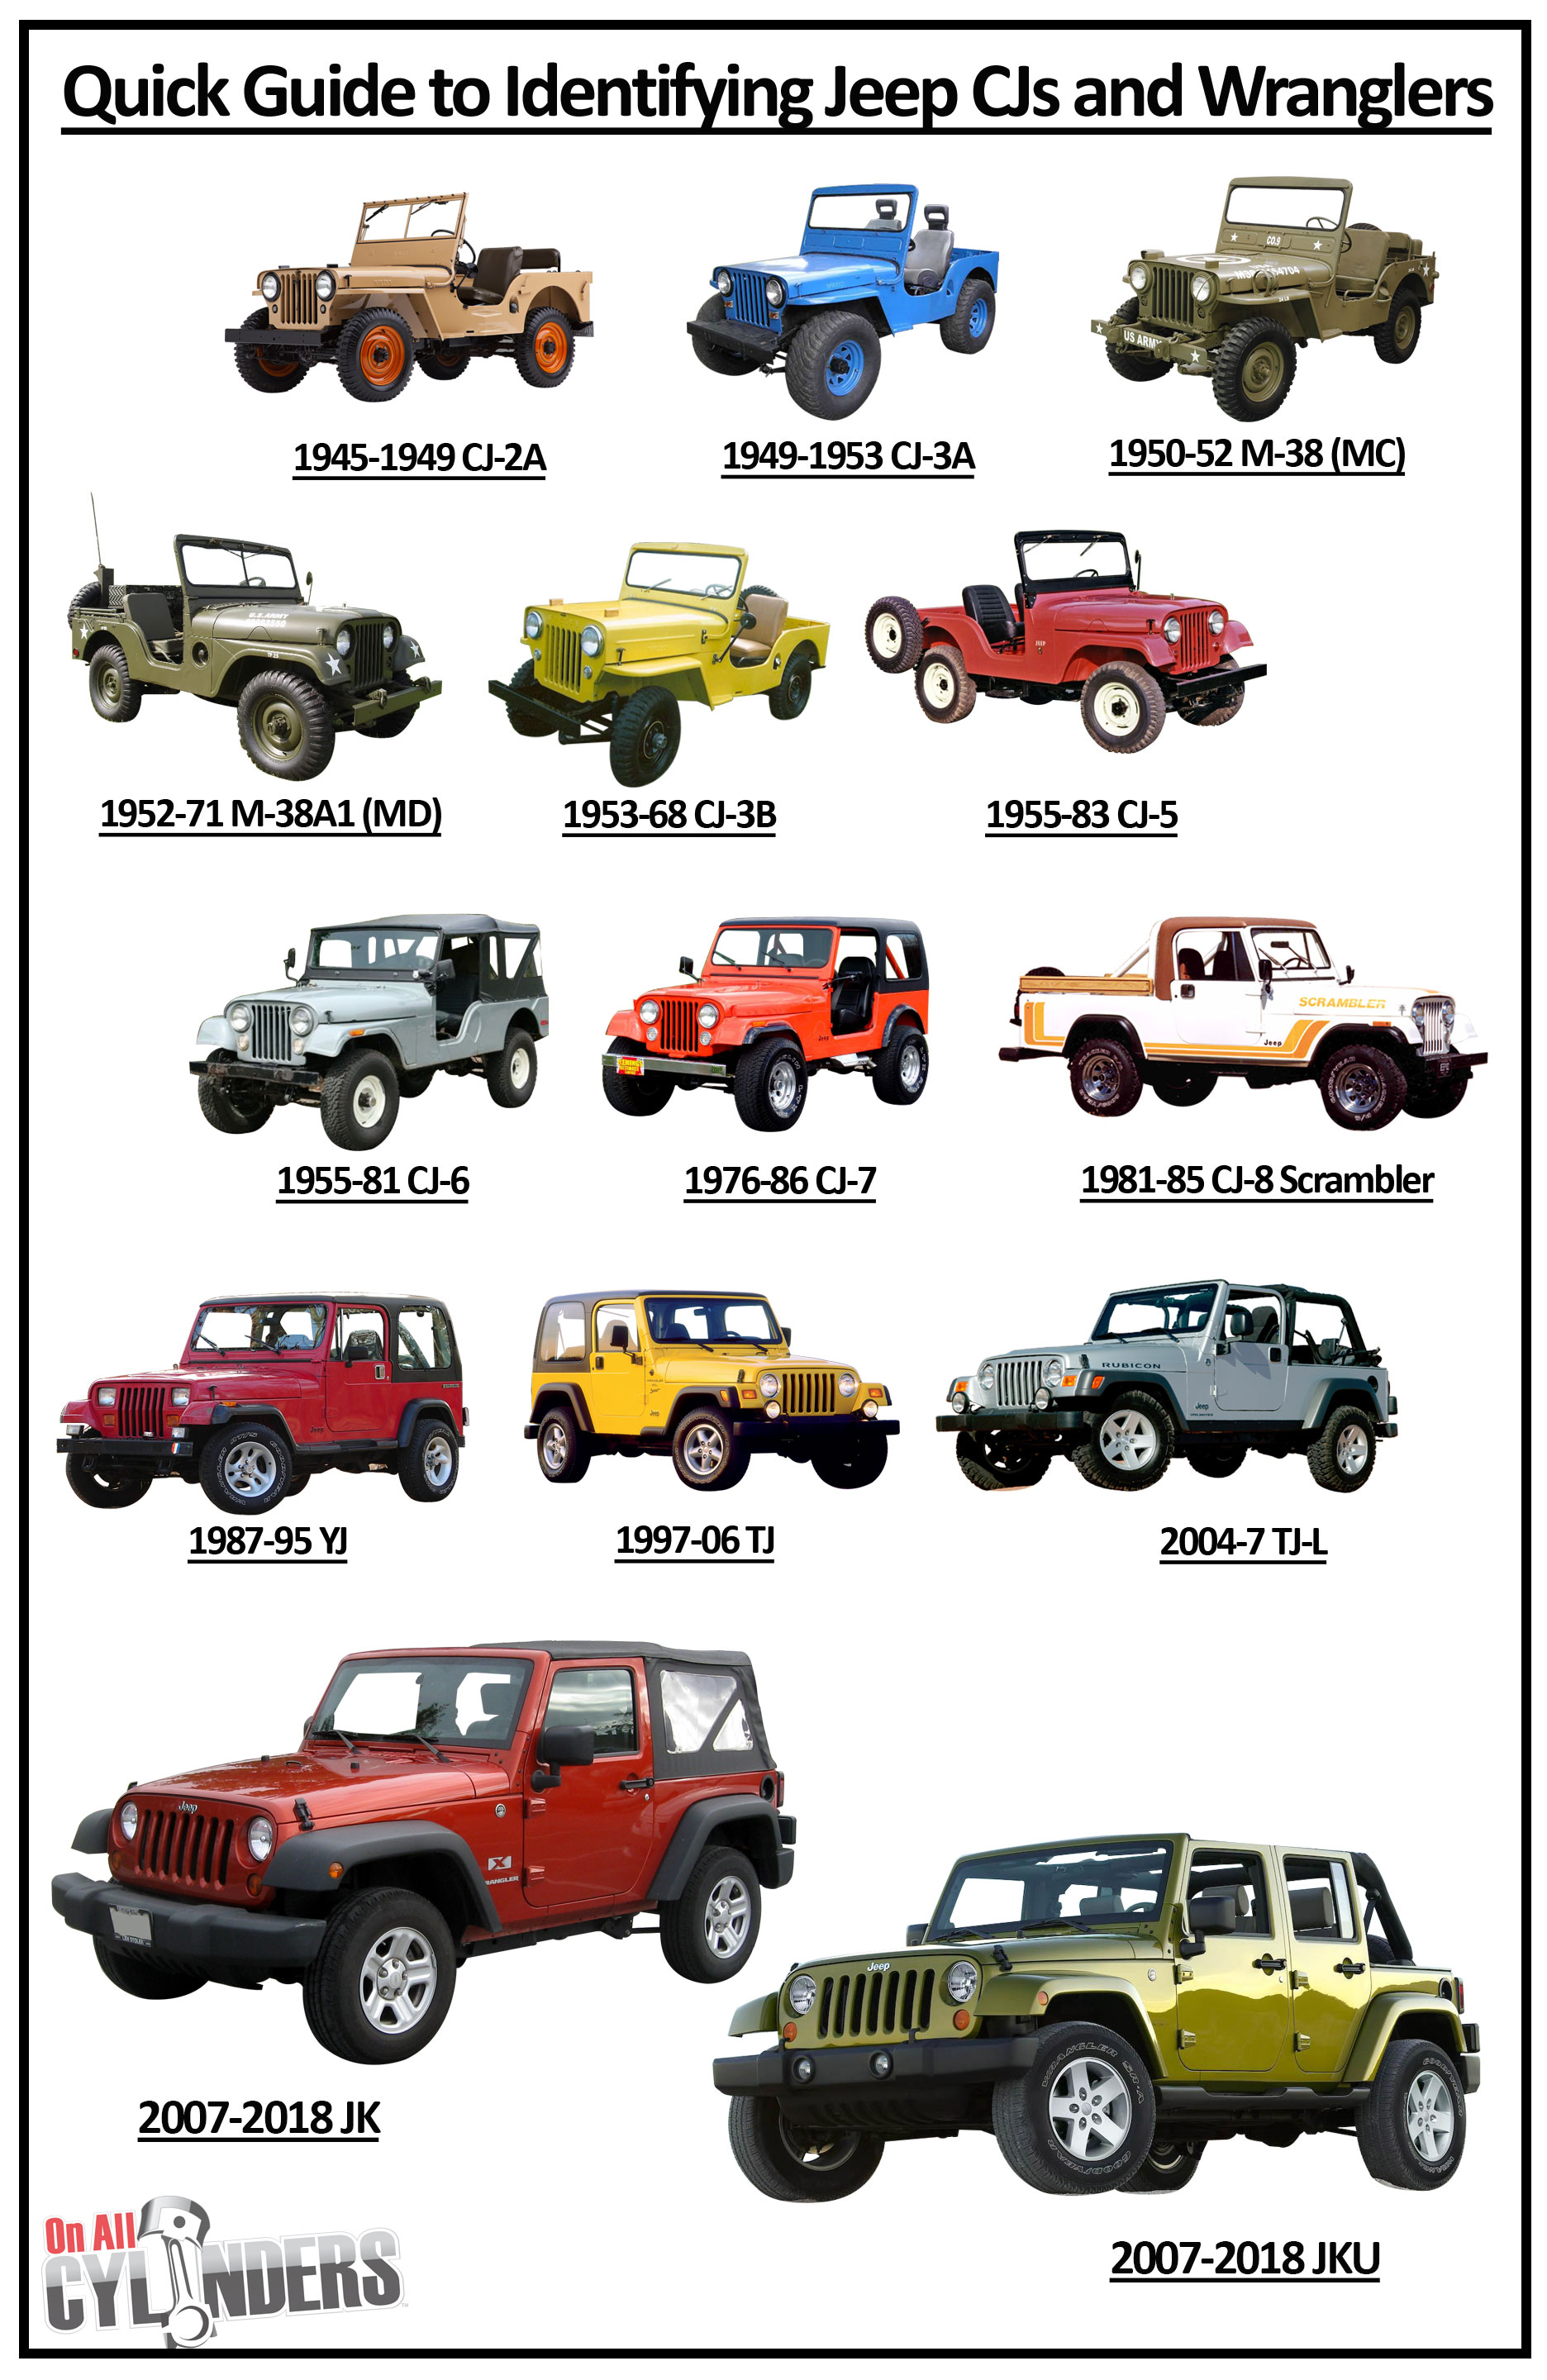 Jeep model names